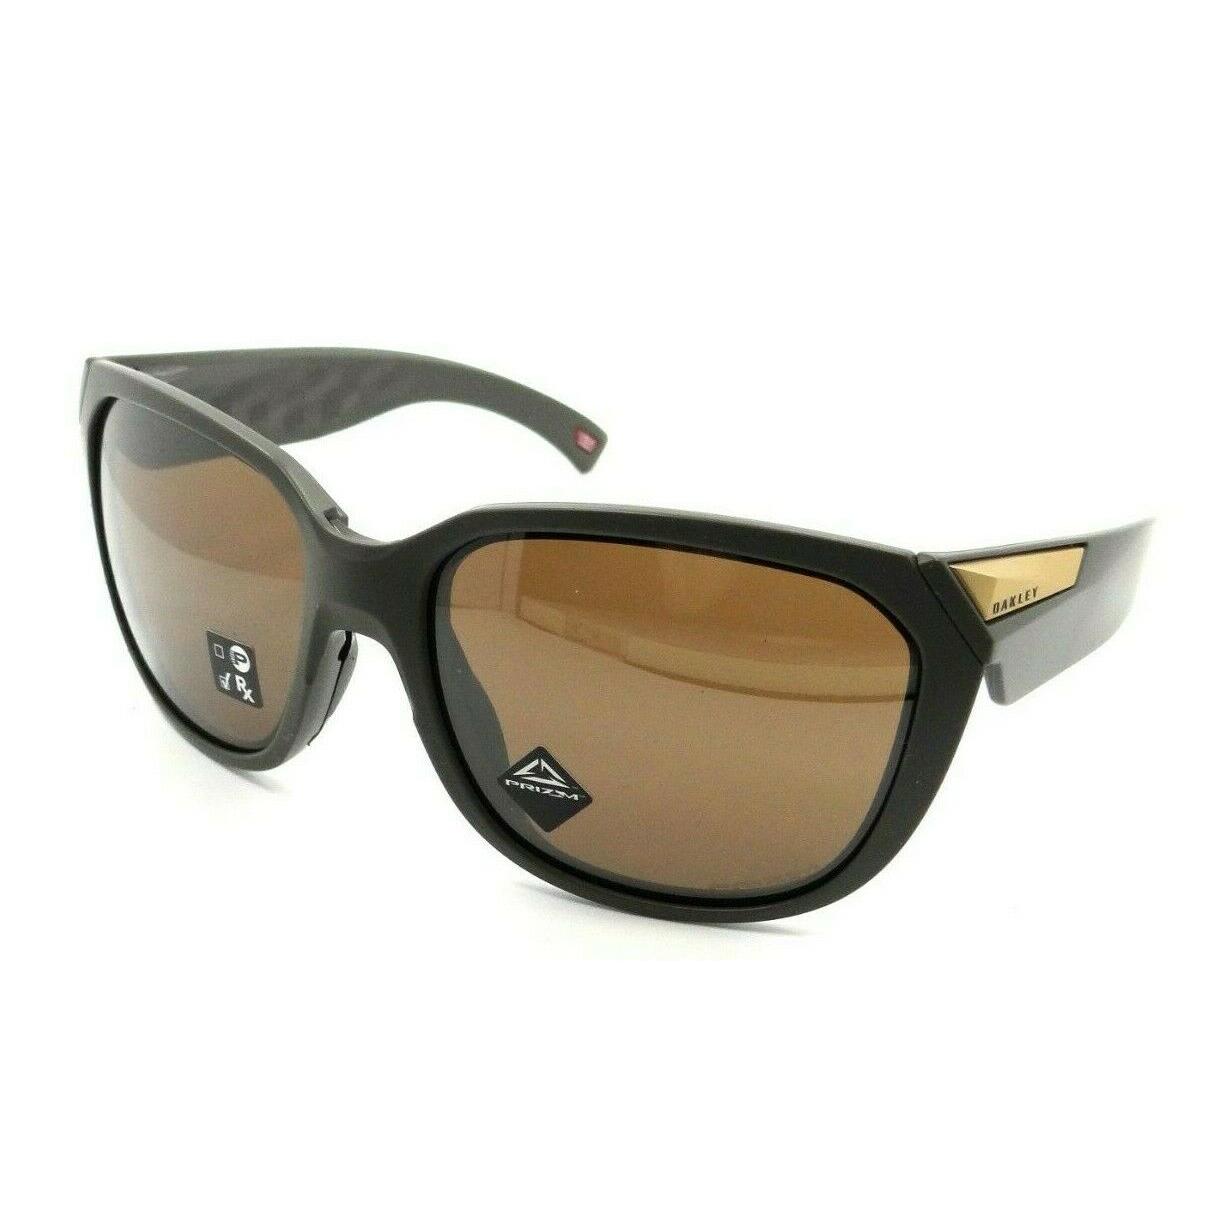 Oakley Sunglasses OO9432-0459 59-16-126 Rev Up Matte Olive / Prizm Tungsten - Multicolor Frame, Multicolor Lens